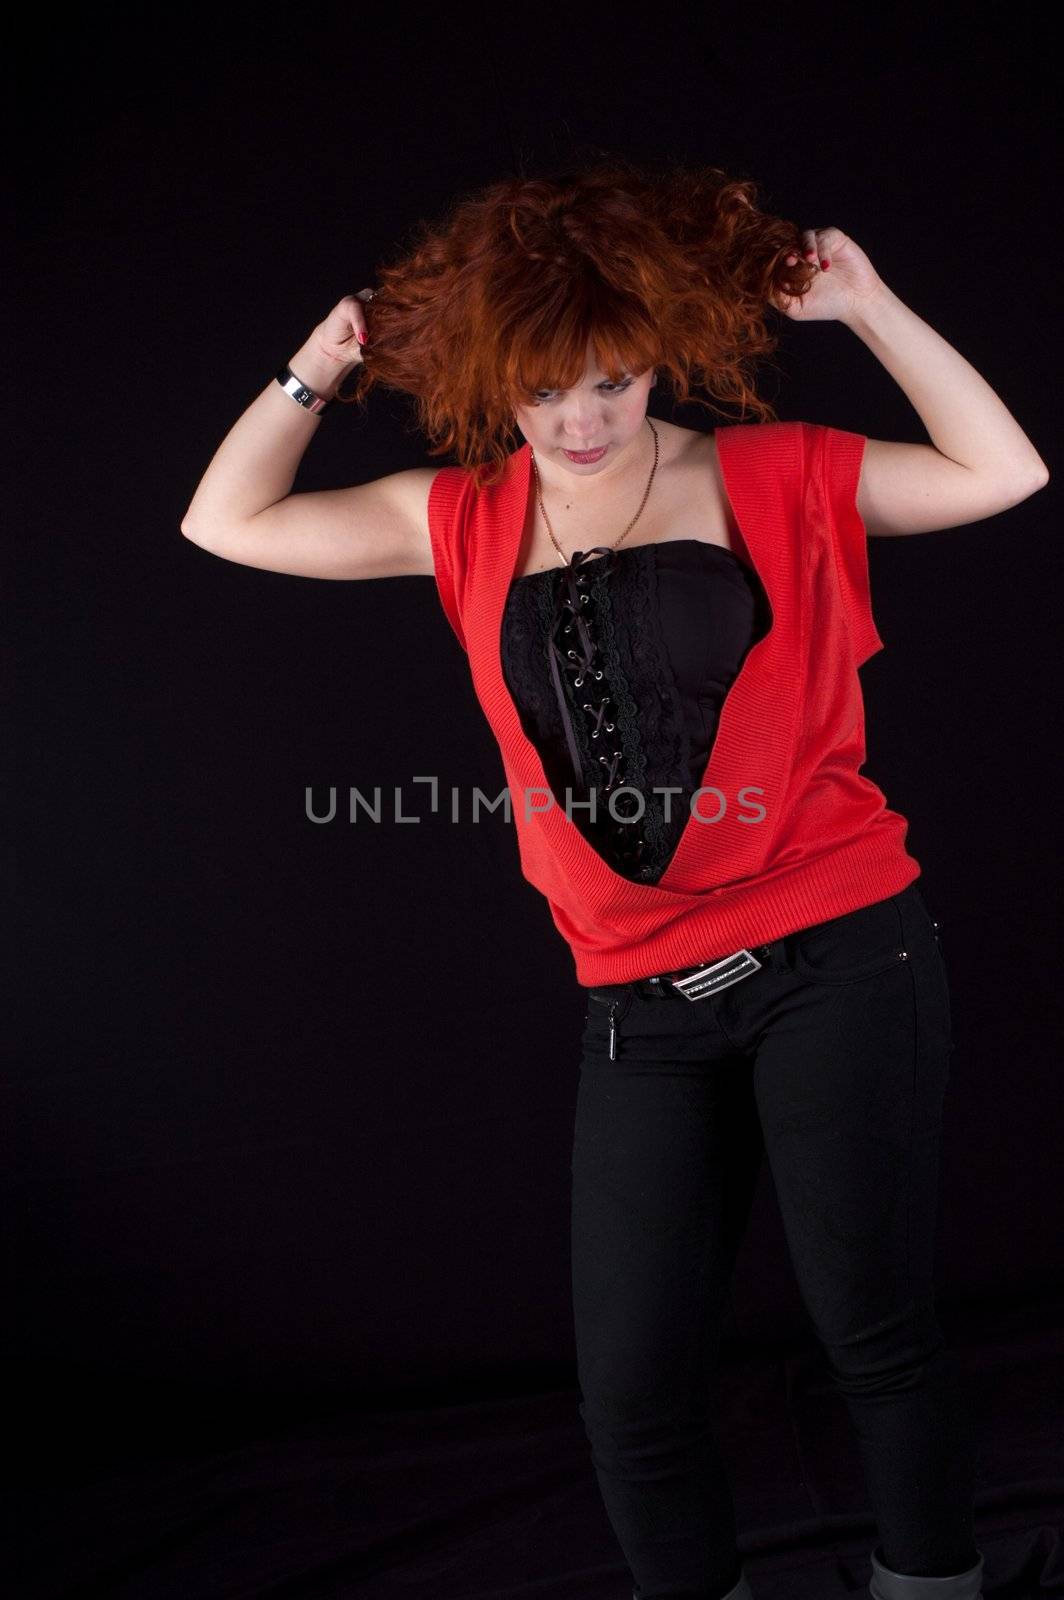 beautiful redhead by mettus